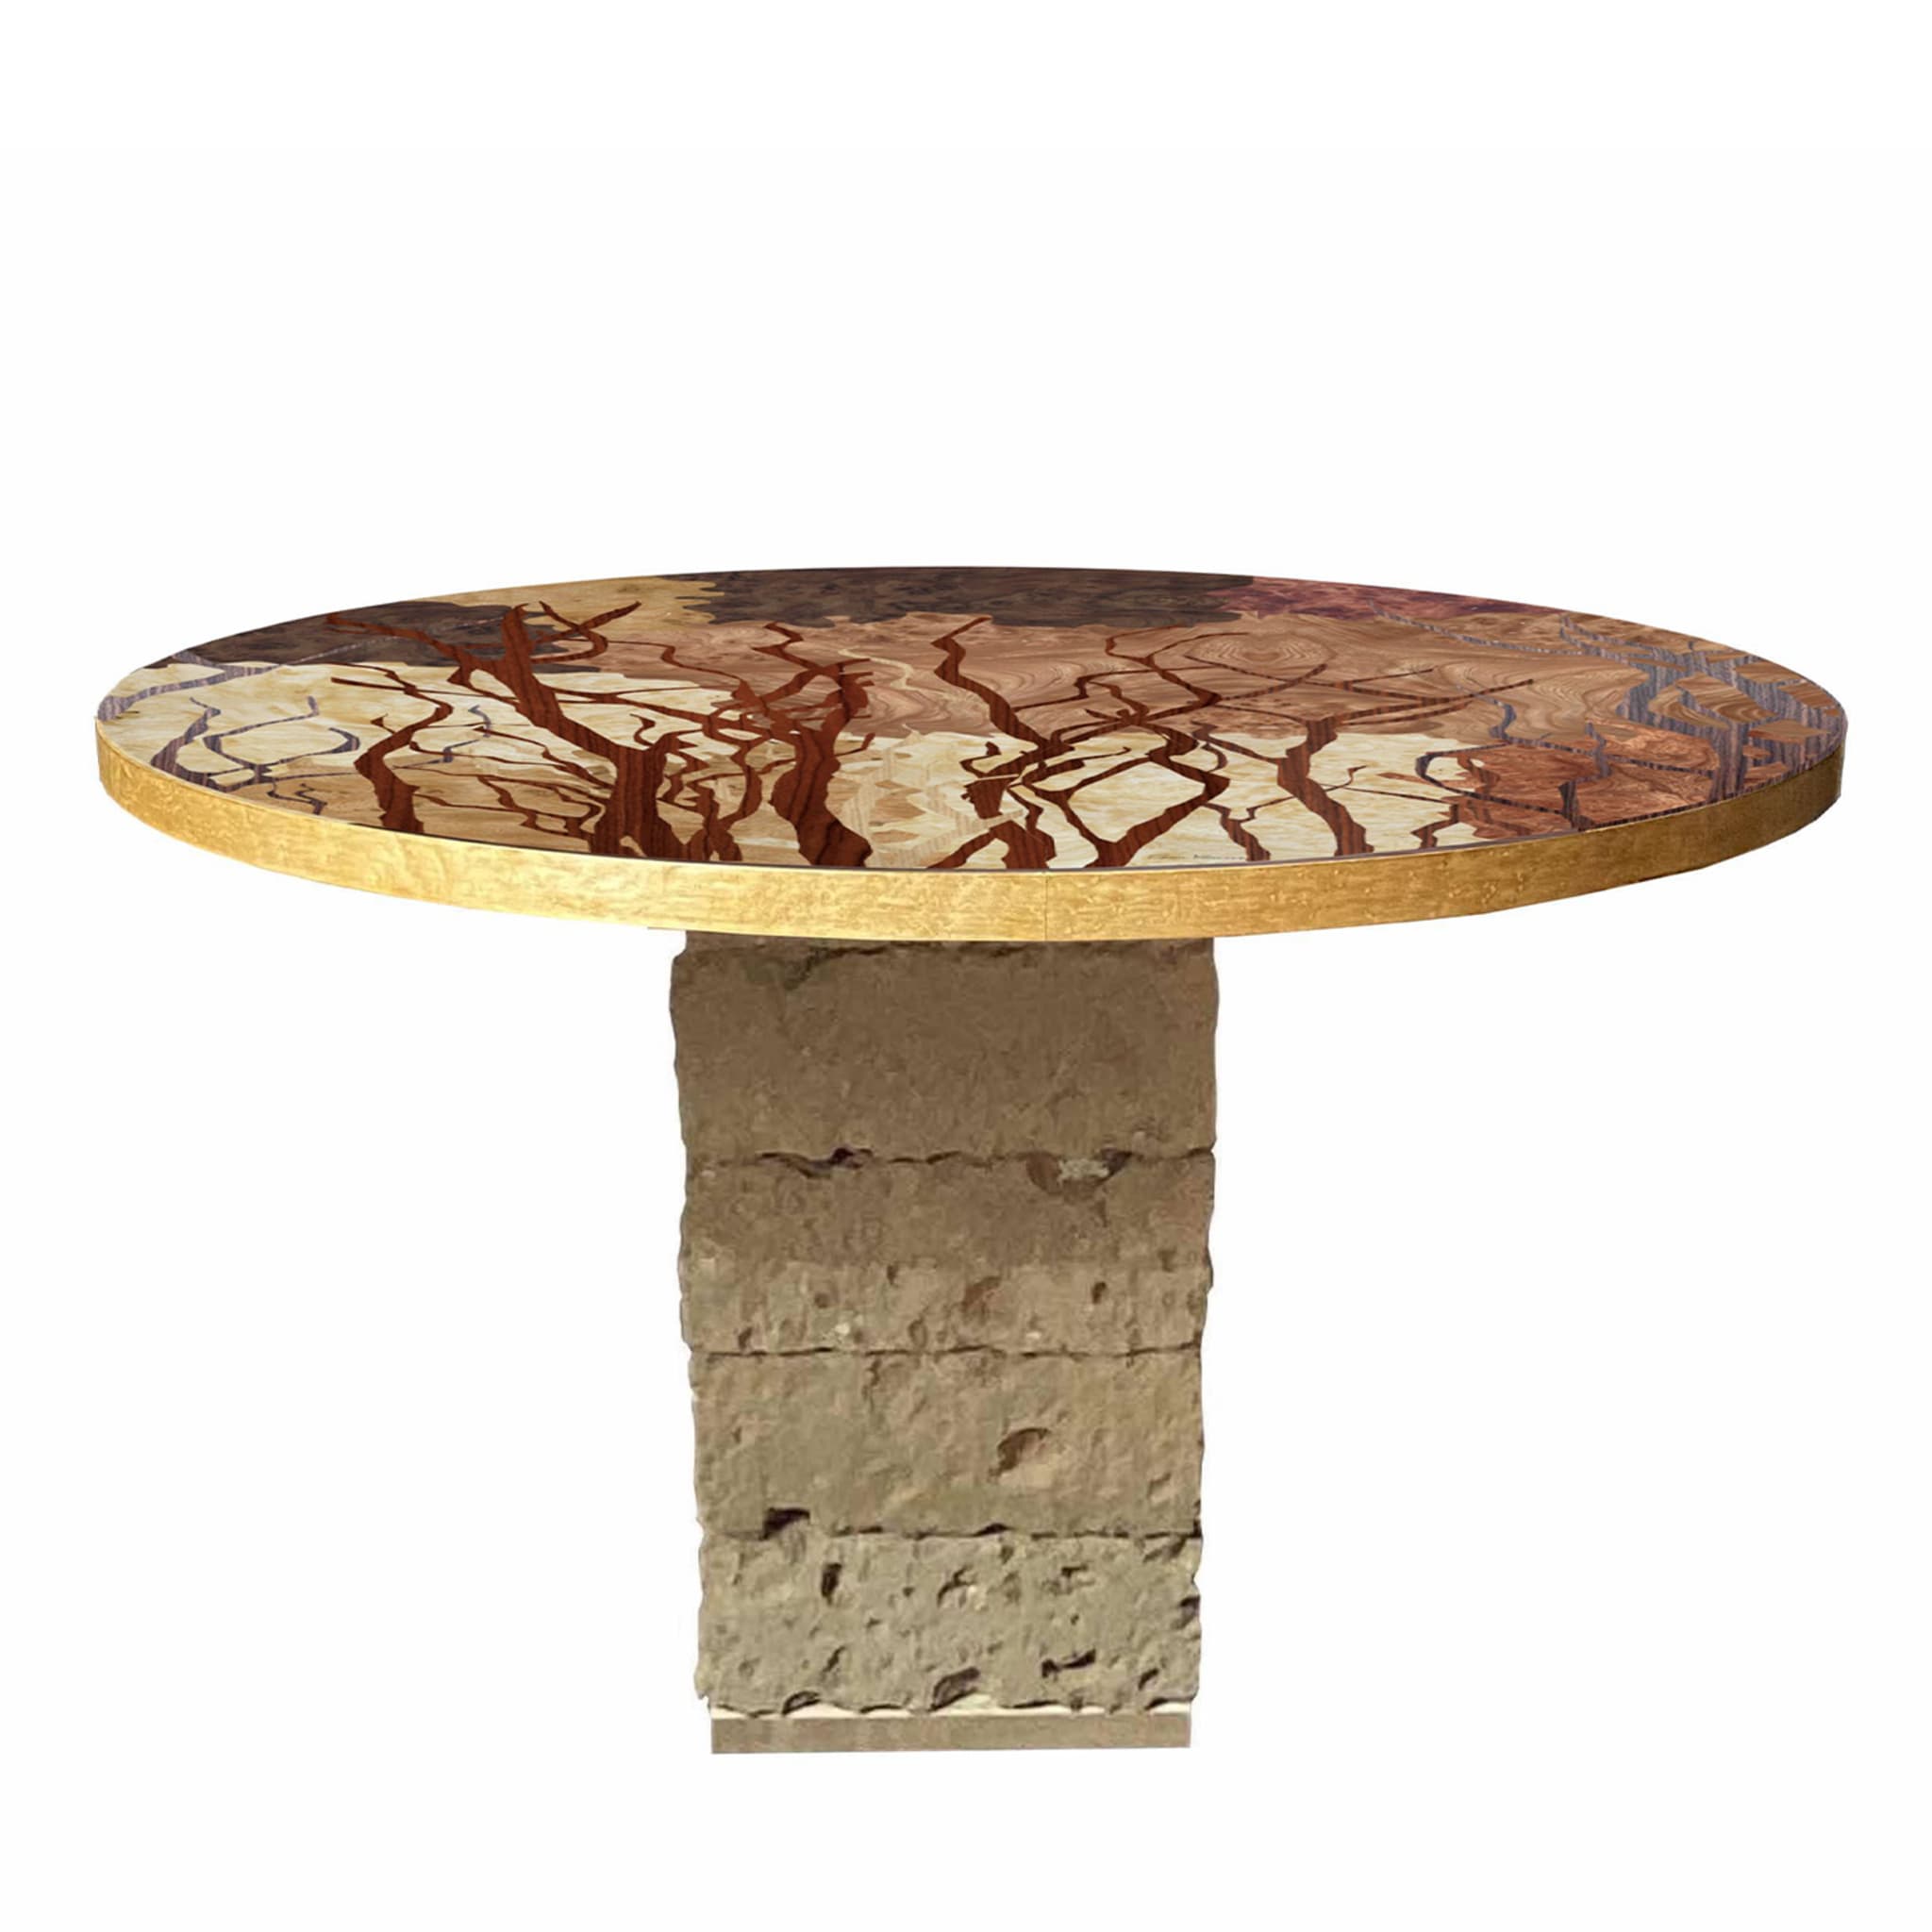 Tarsia Tables Tt2 Round Polychrome Table by Mascia Meccani - Alternative view 2